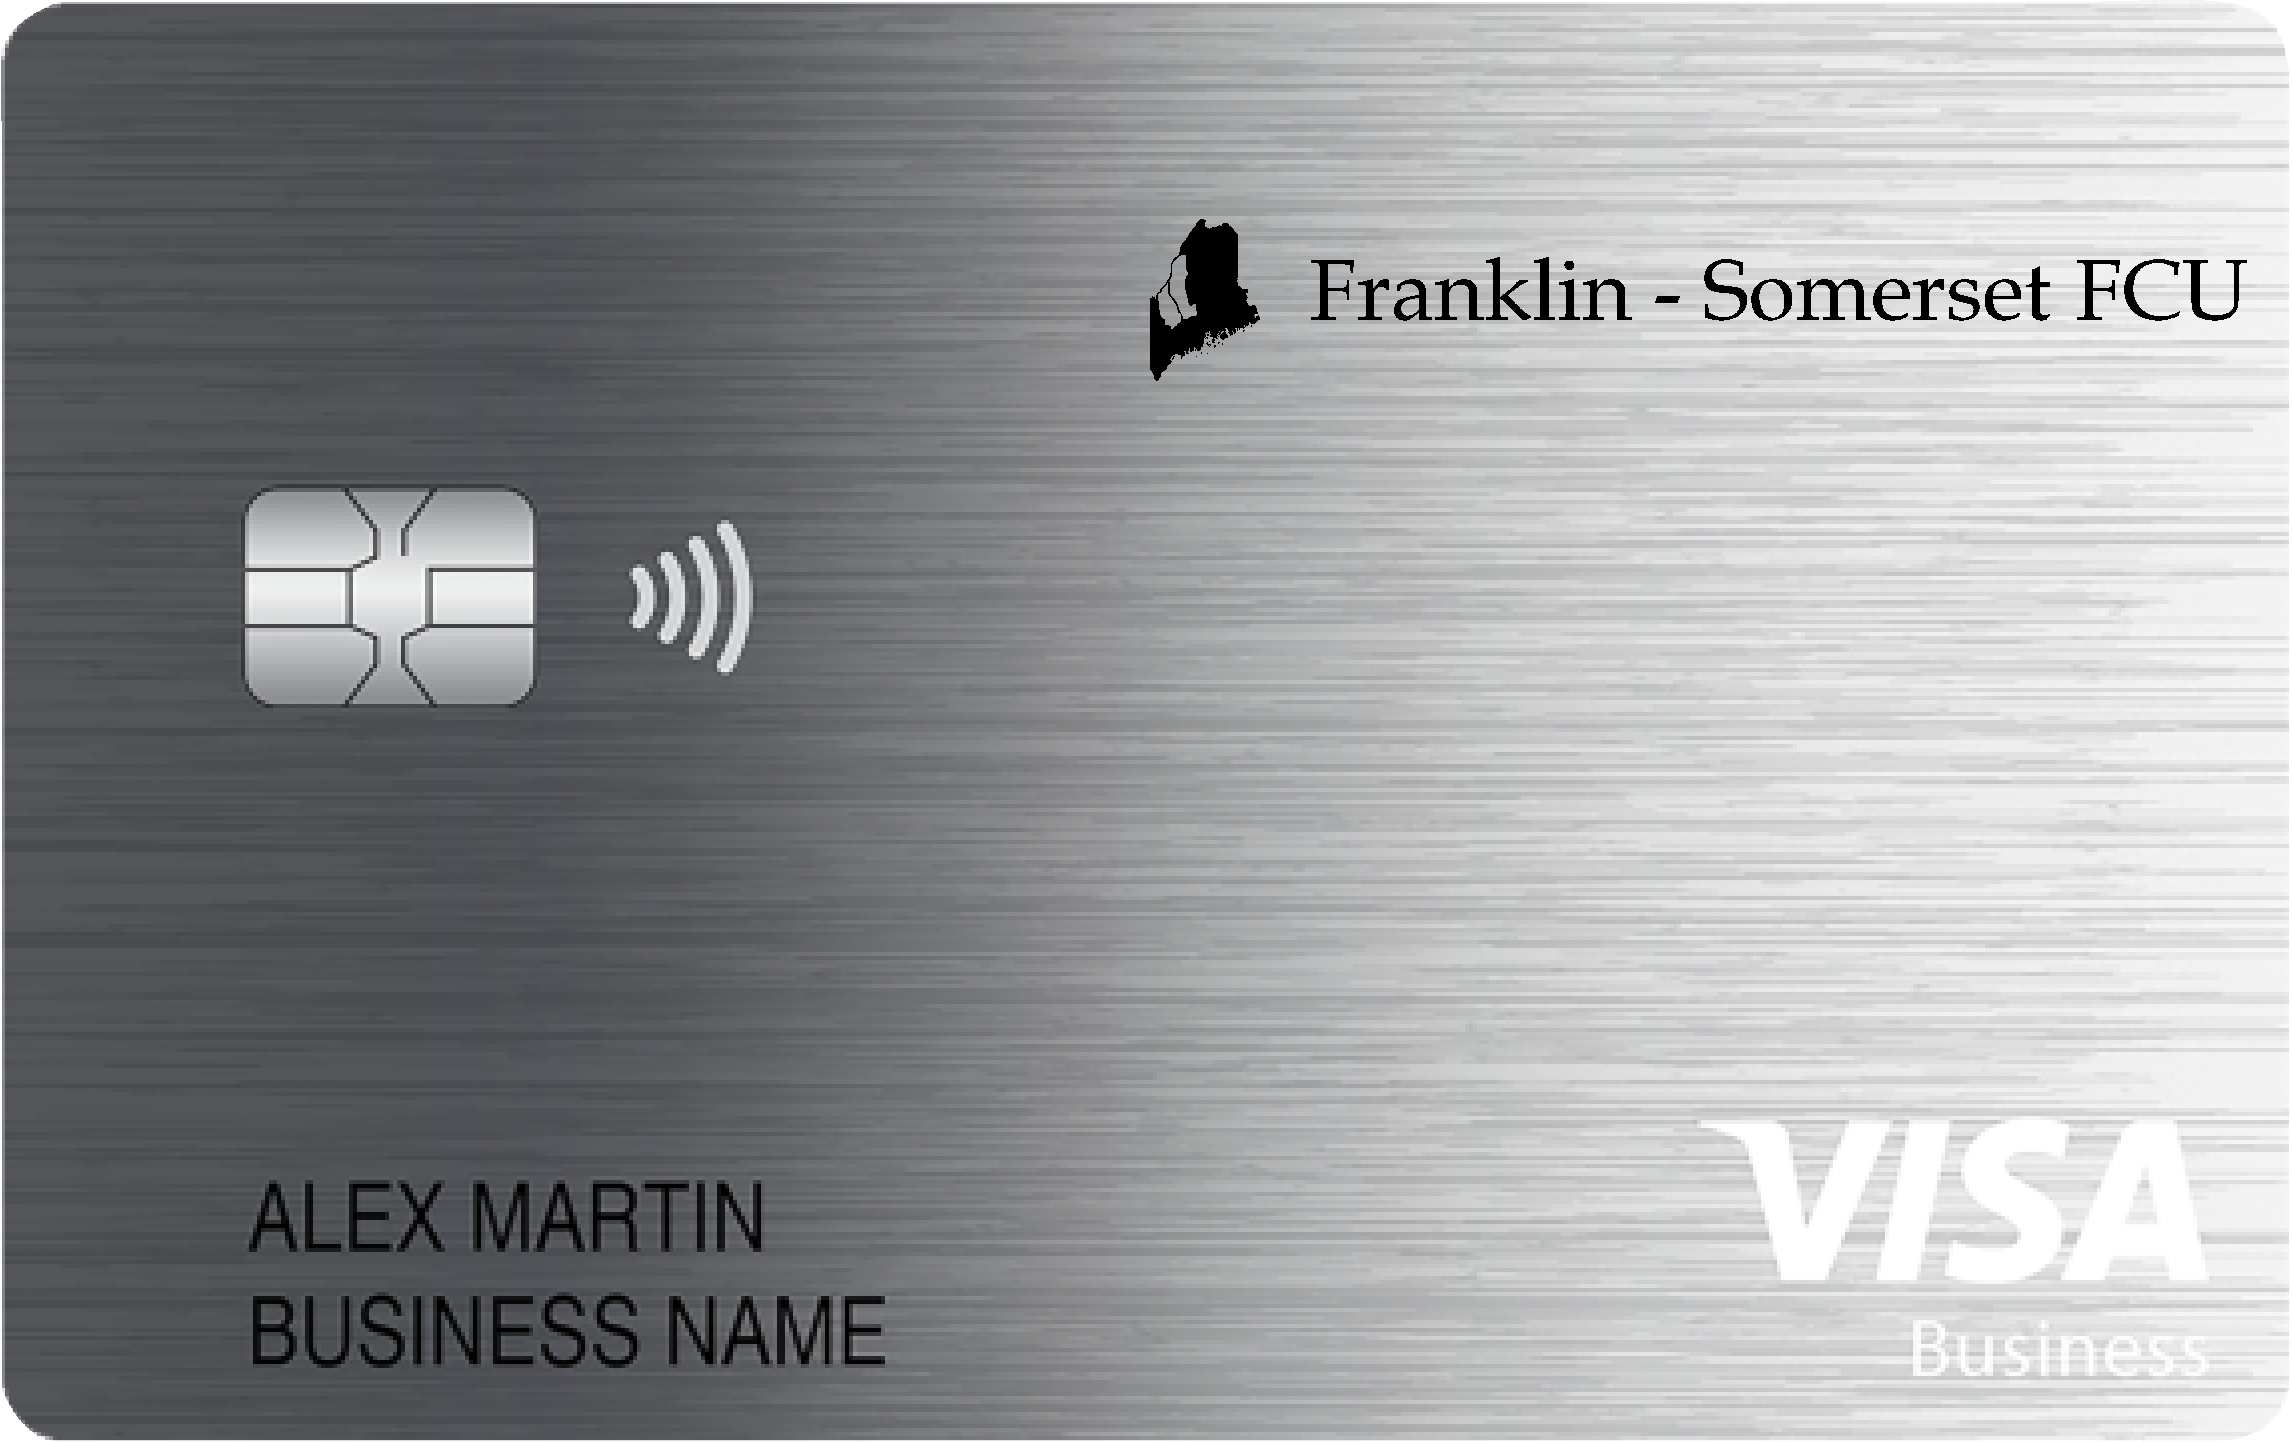 Franklin-Somerset FCU Business Cash Preferred Card